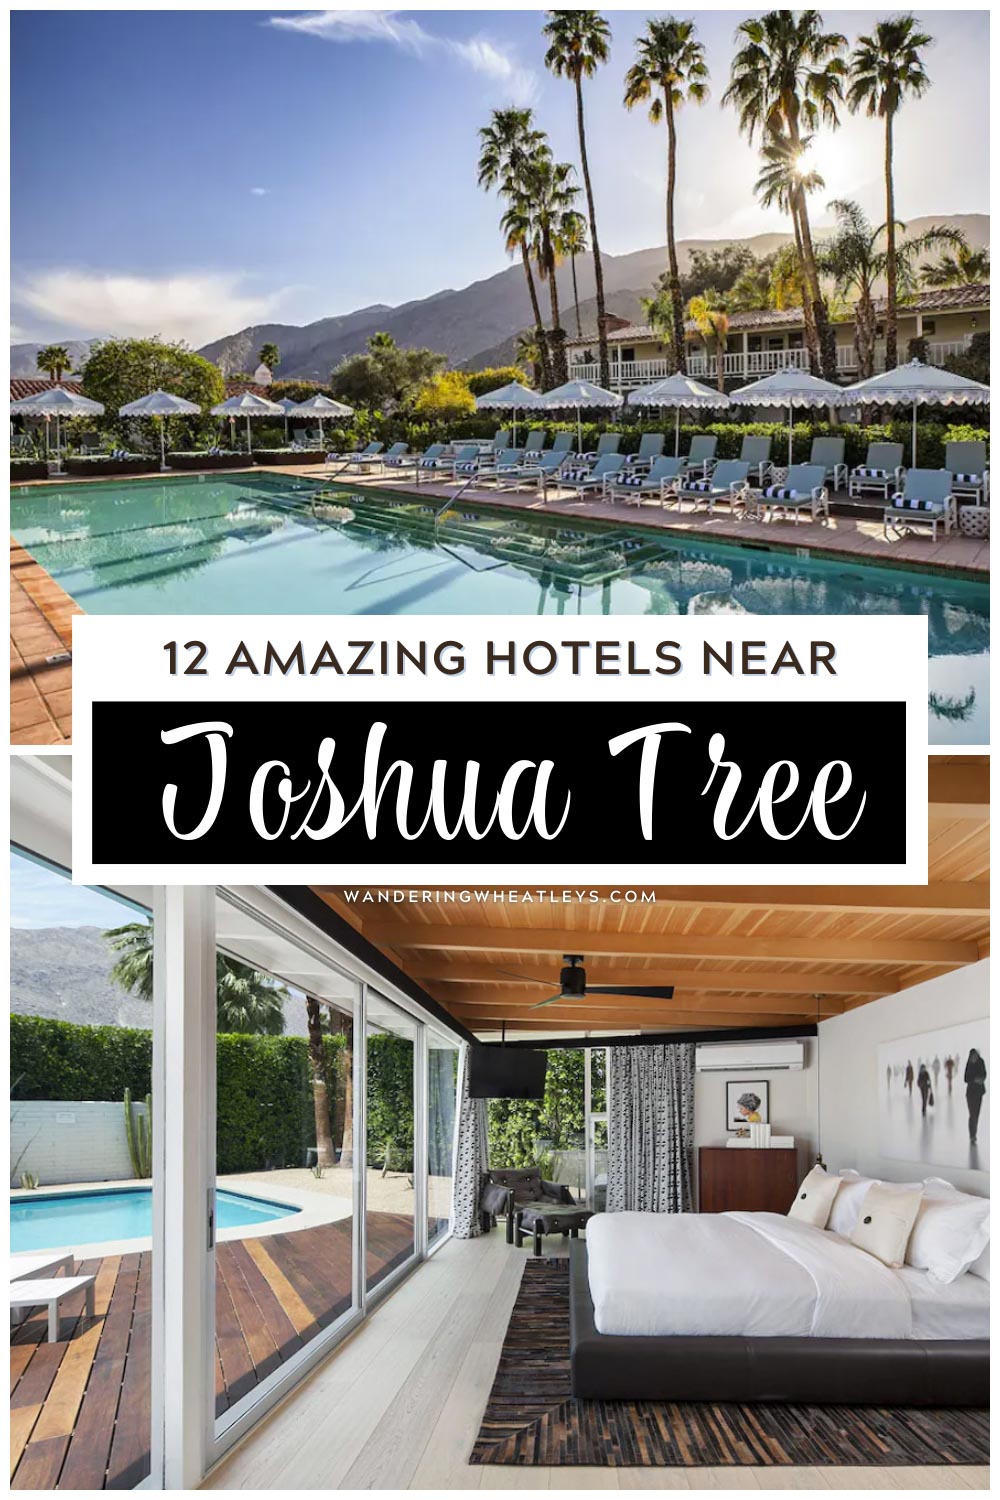 The Best Hotels near Joshua Tree National Park